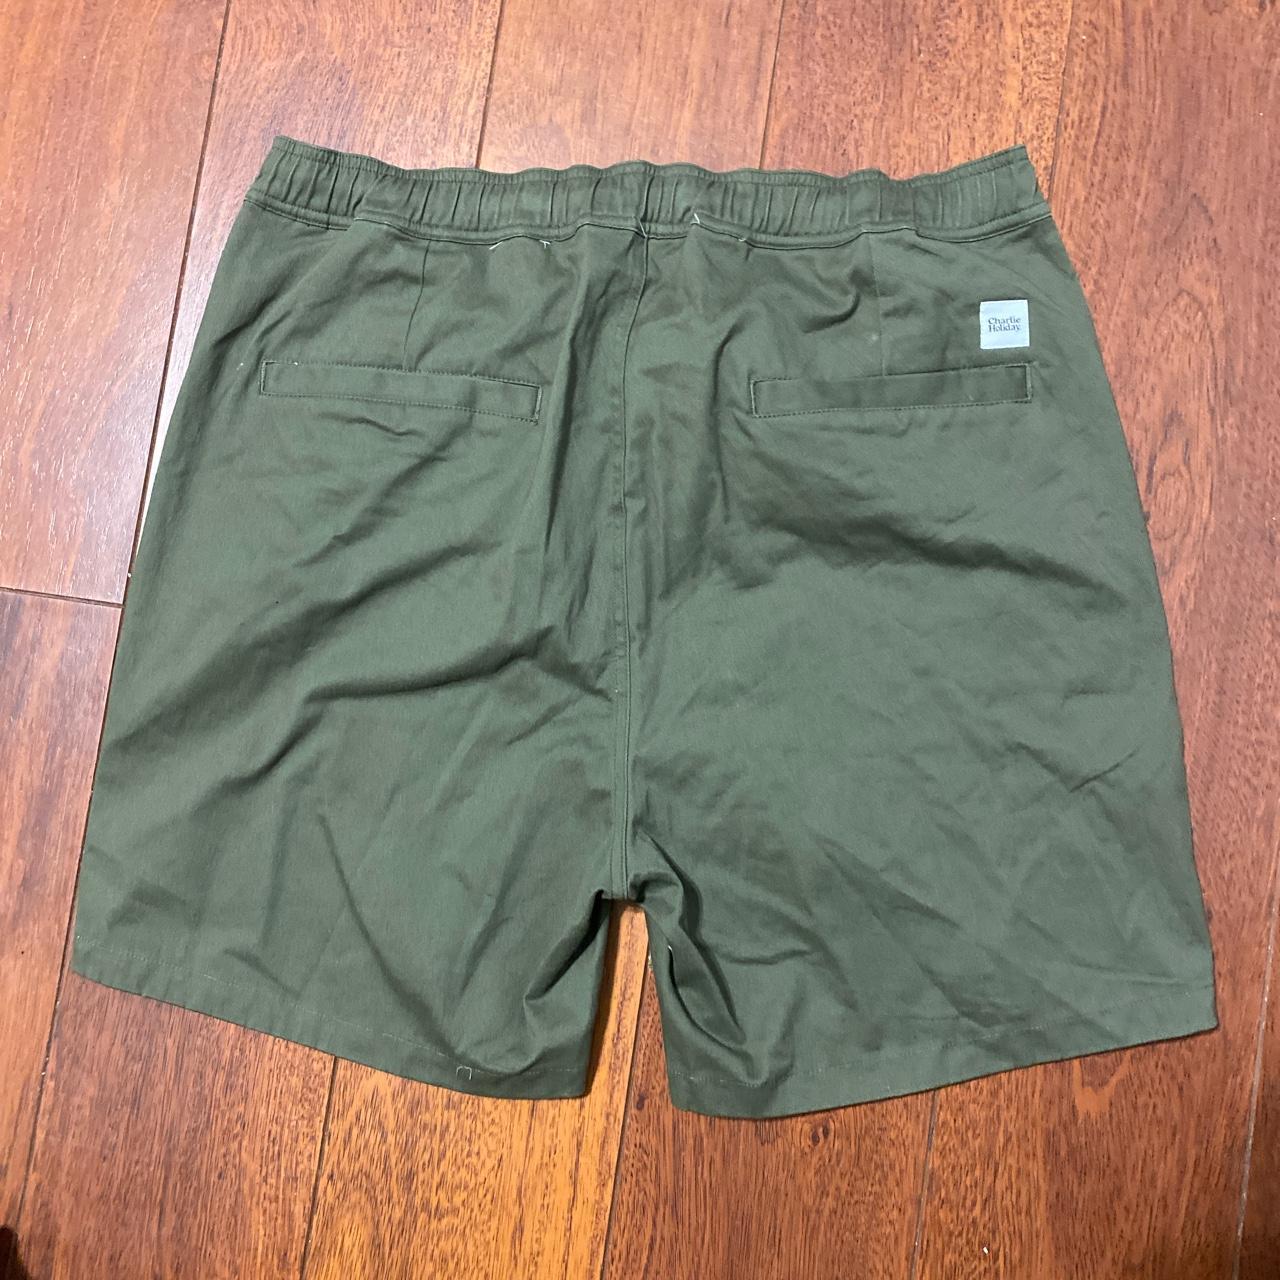 Product Image 3 - Mens Dark Green Shorts
Size: 36
Brand: